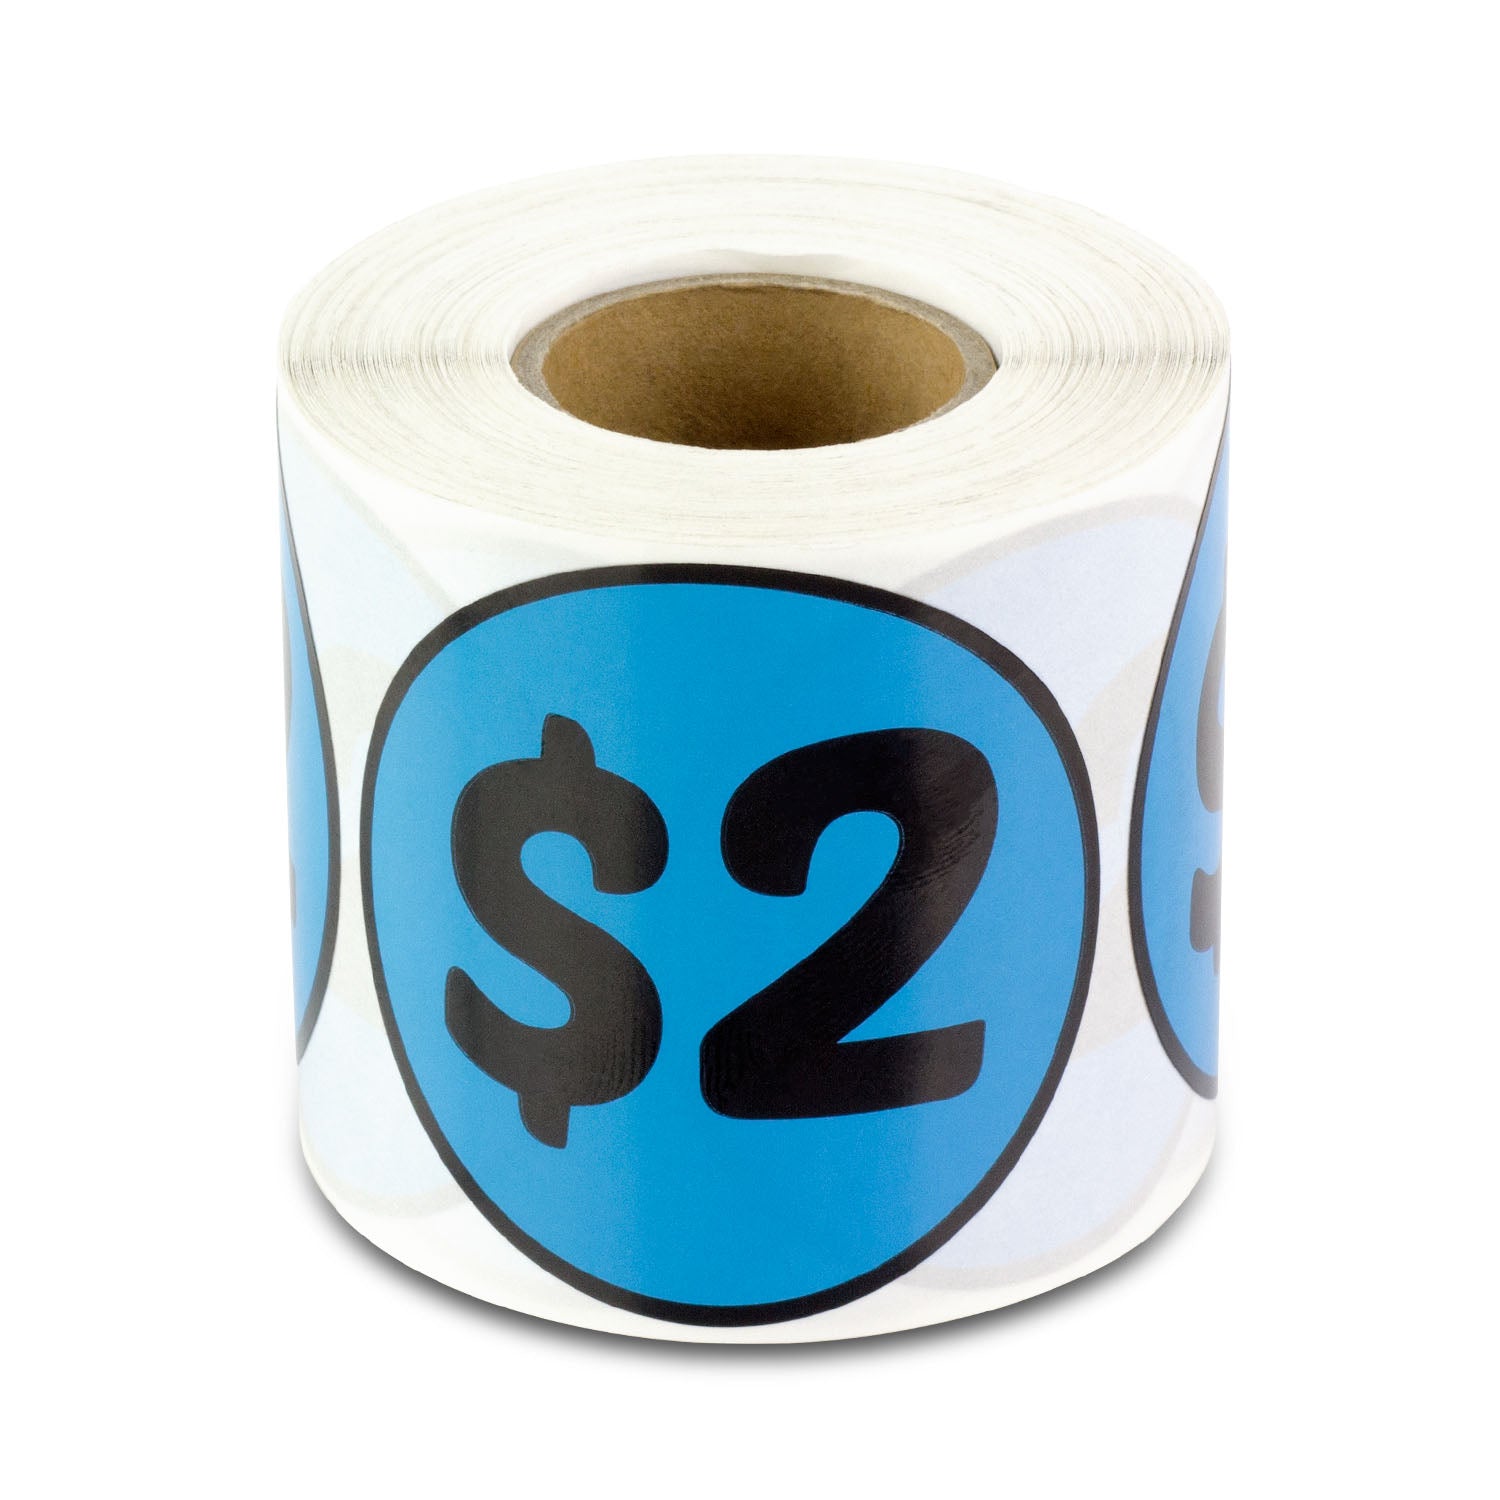 2 inch  Retail & Sales: 2 Dollar Stickers / $2 Dollar Price